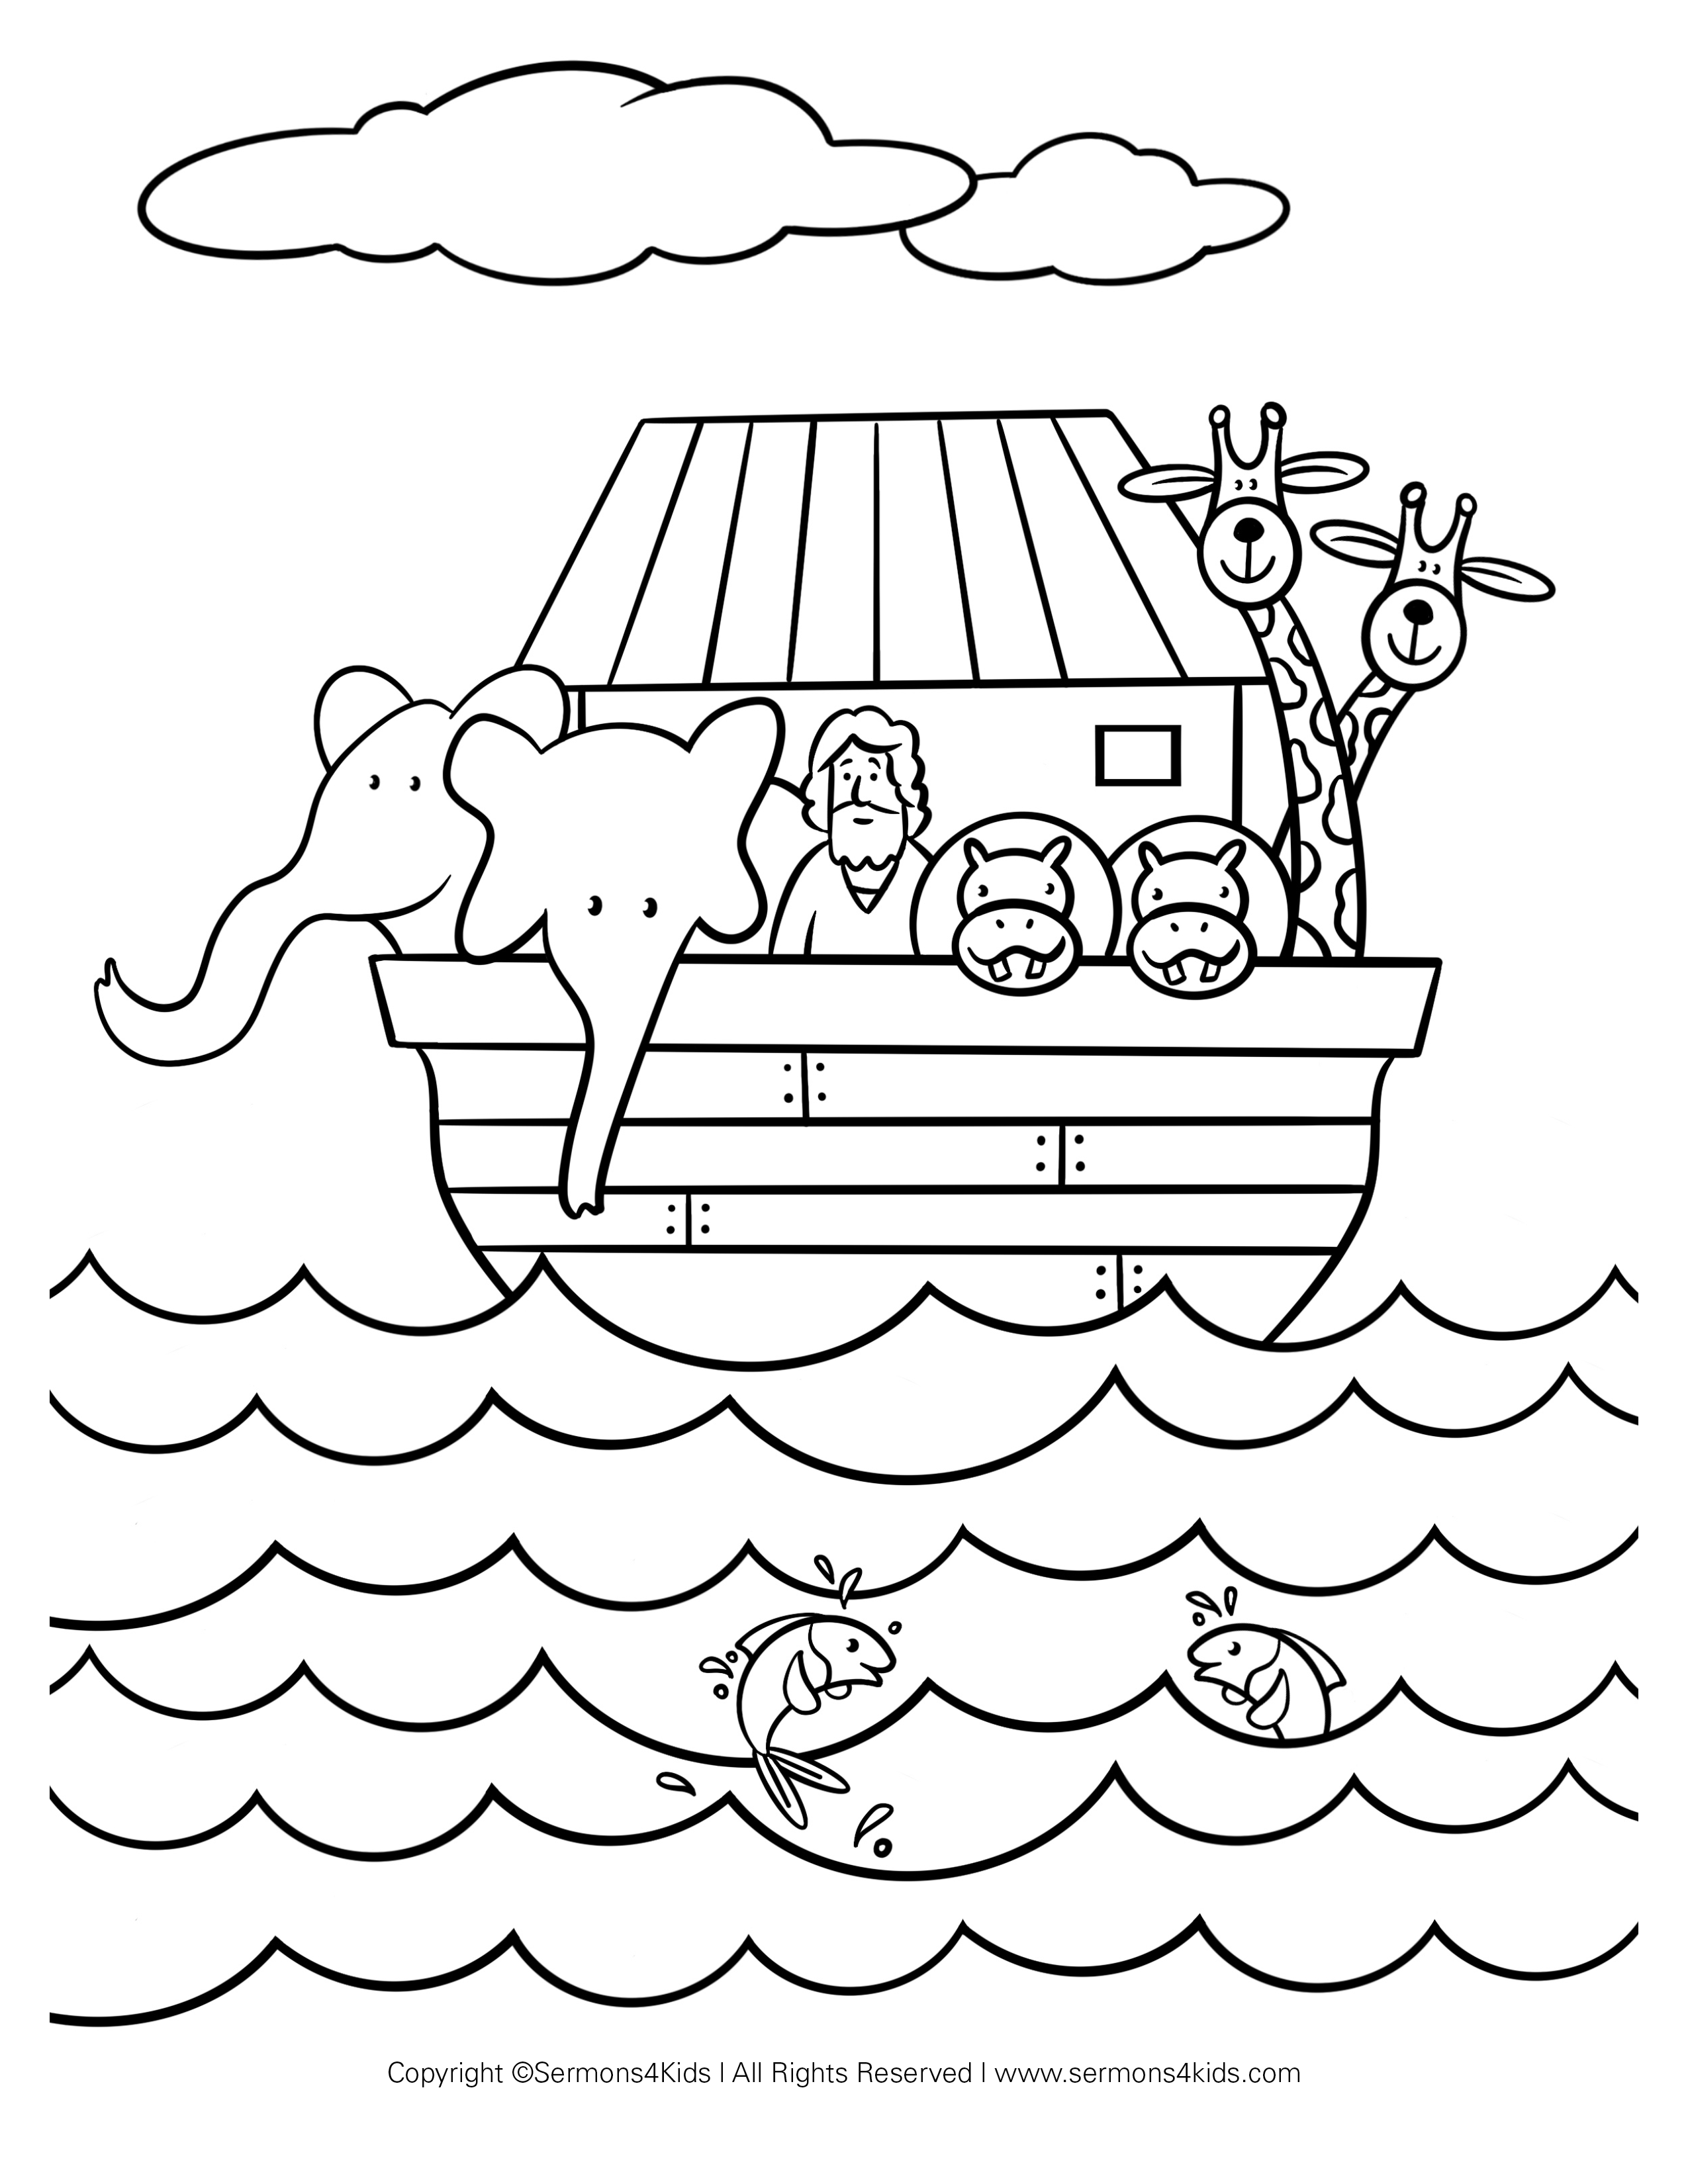 Noahs-ark-coloring-page